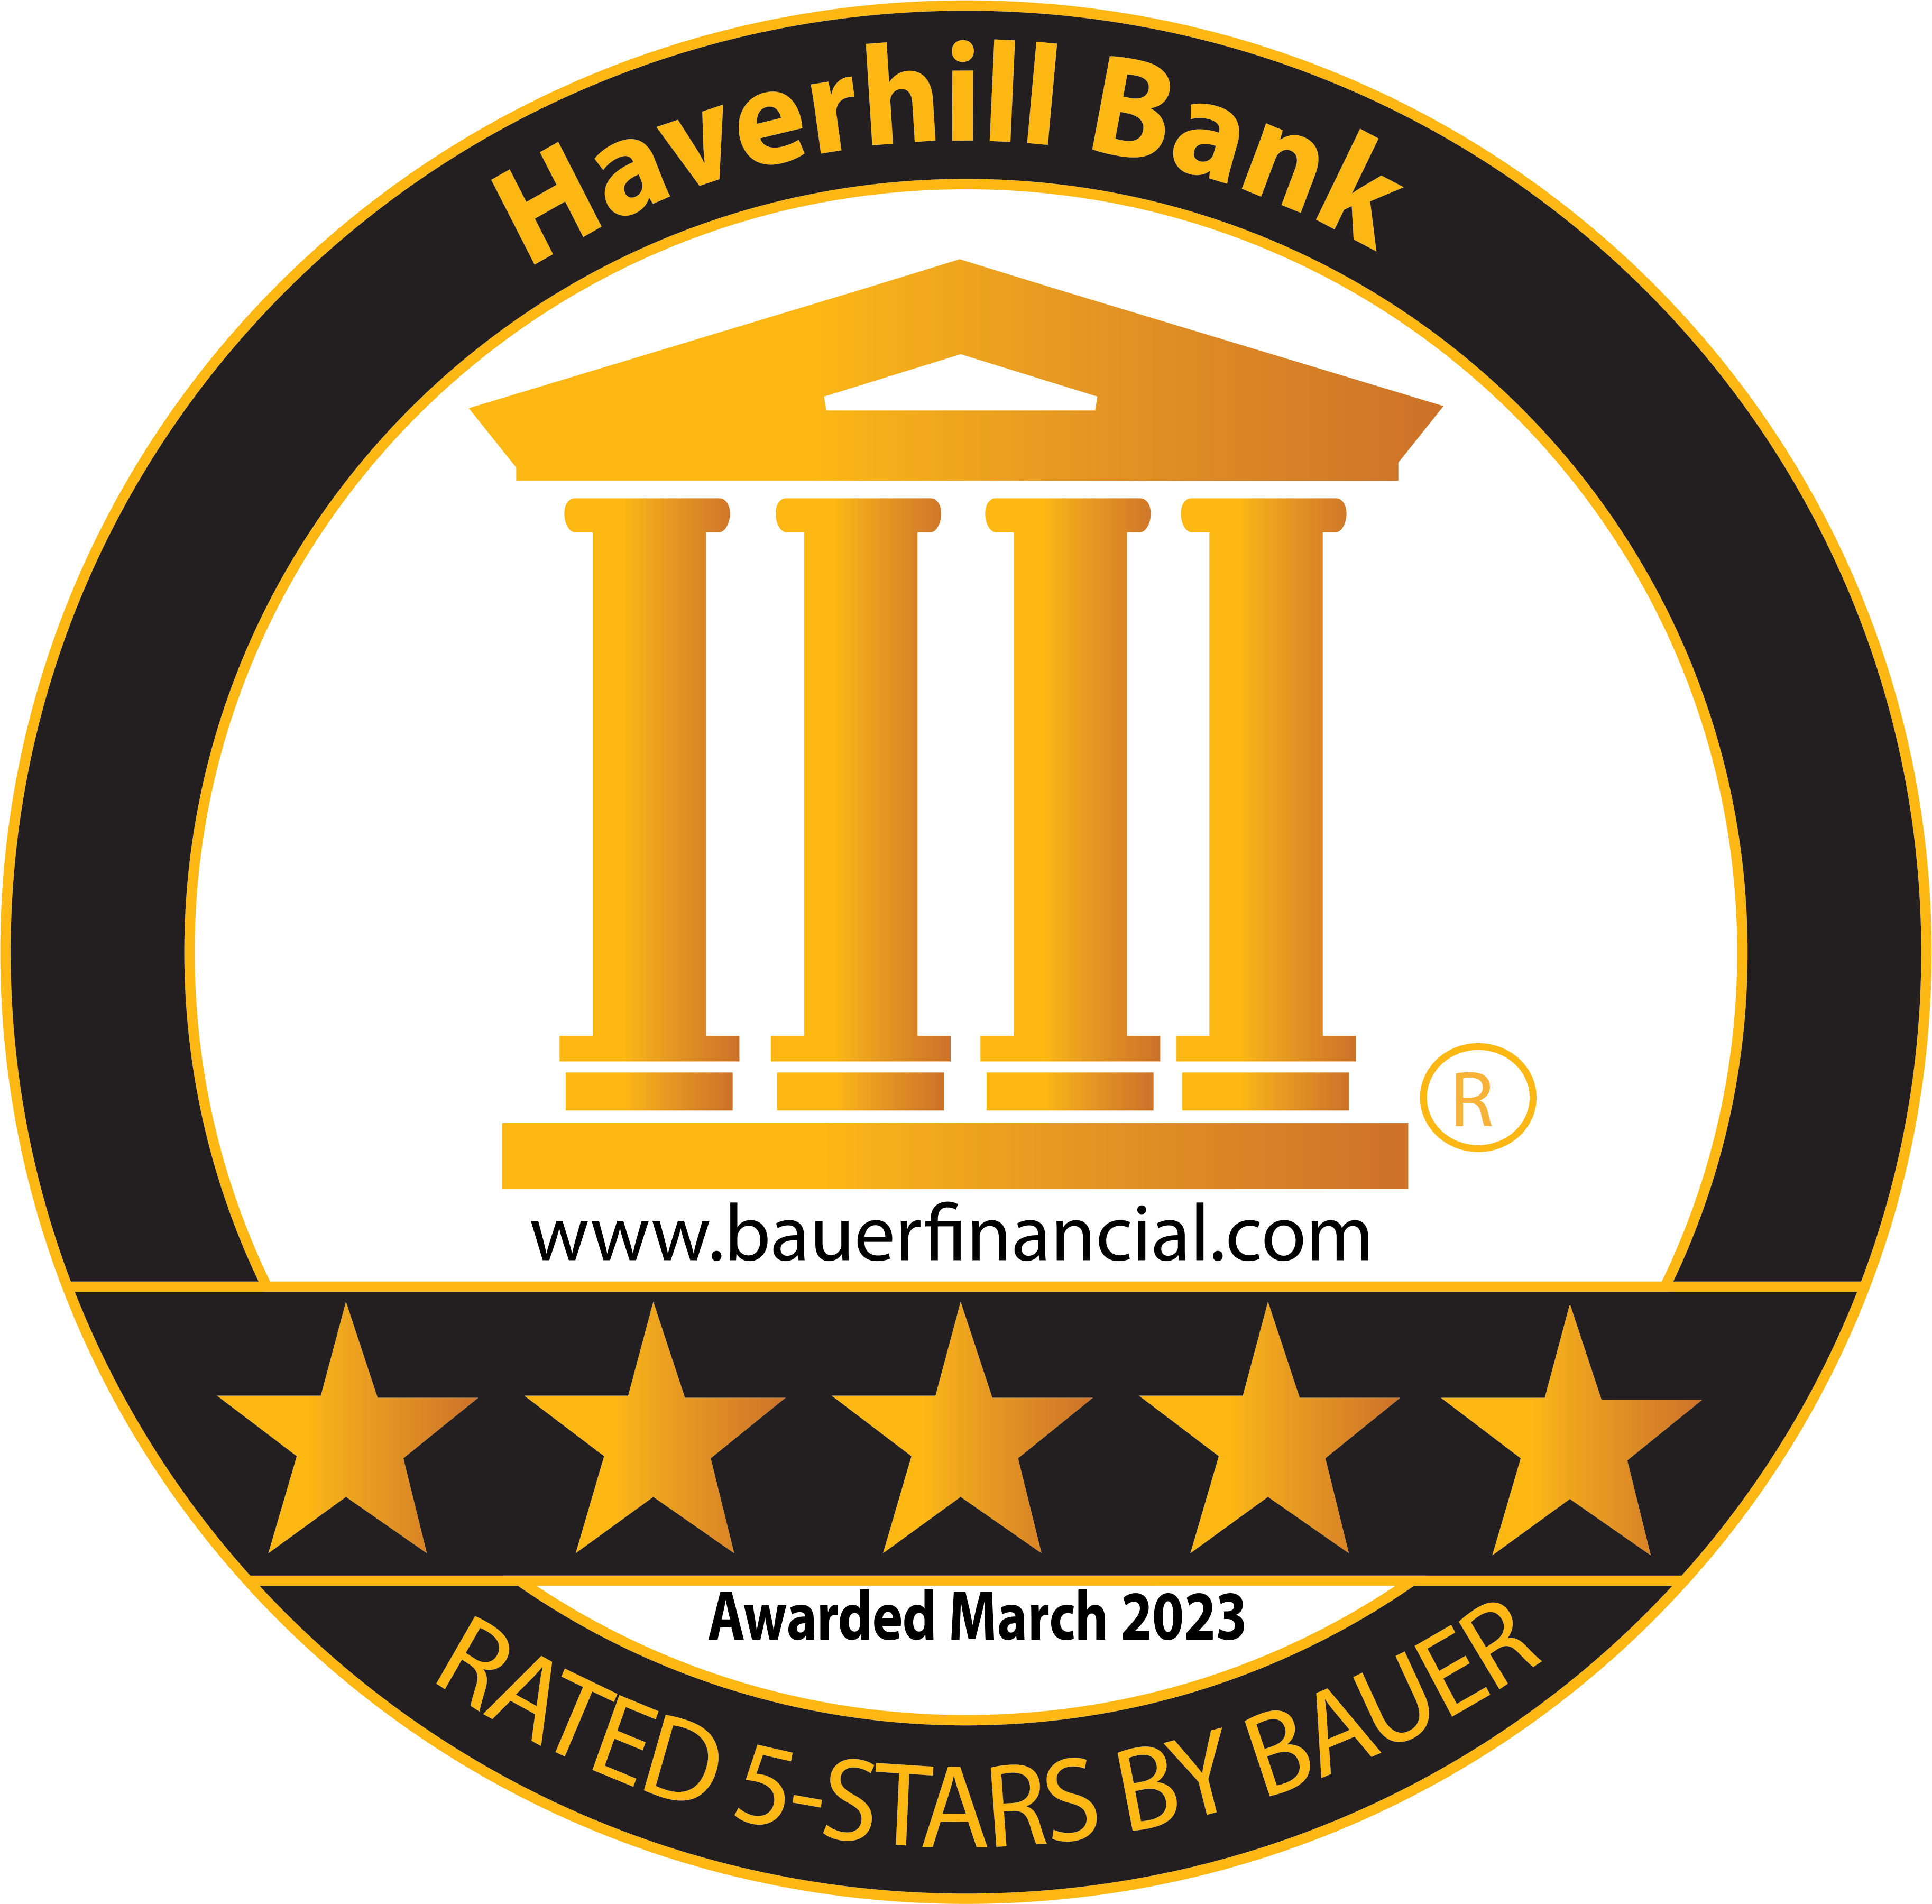 Haverhill Bank 5 Star Bauer Financial Rating